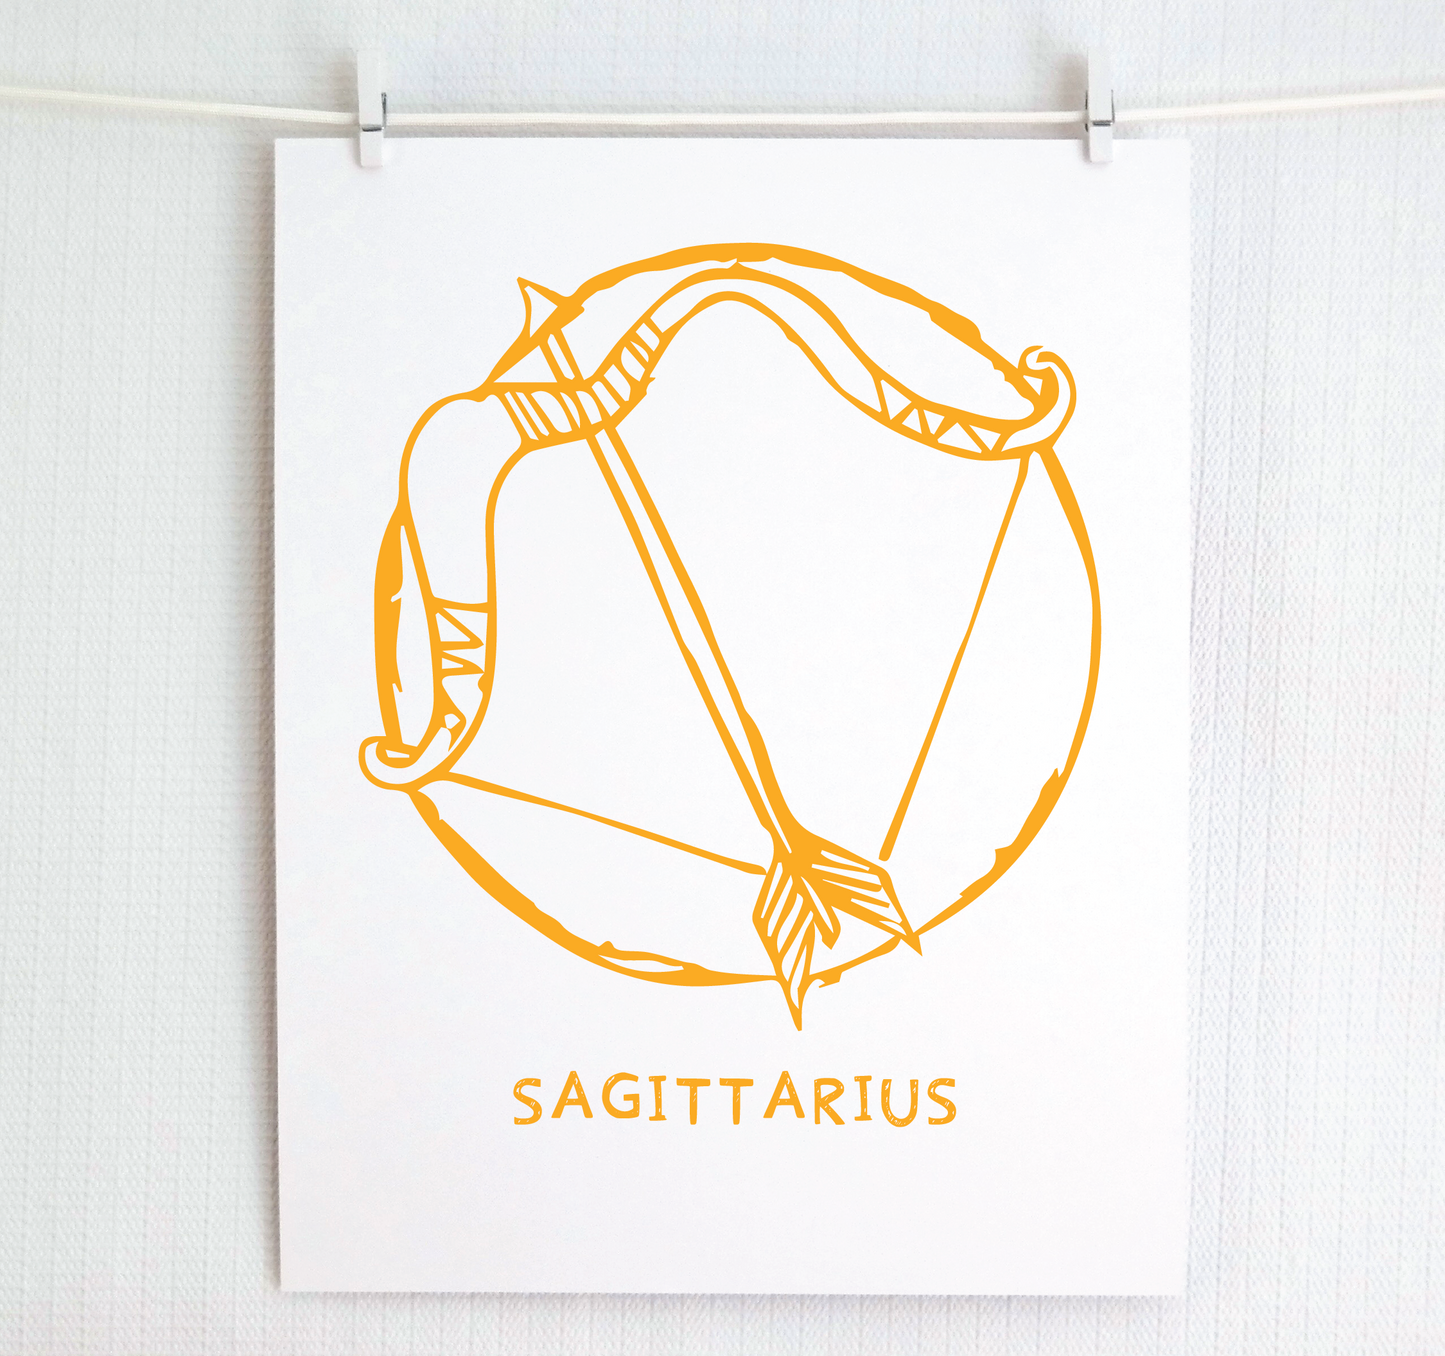 Signs of the Zodiac: SAGITTARIUS